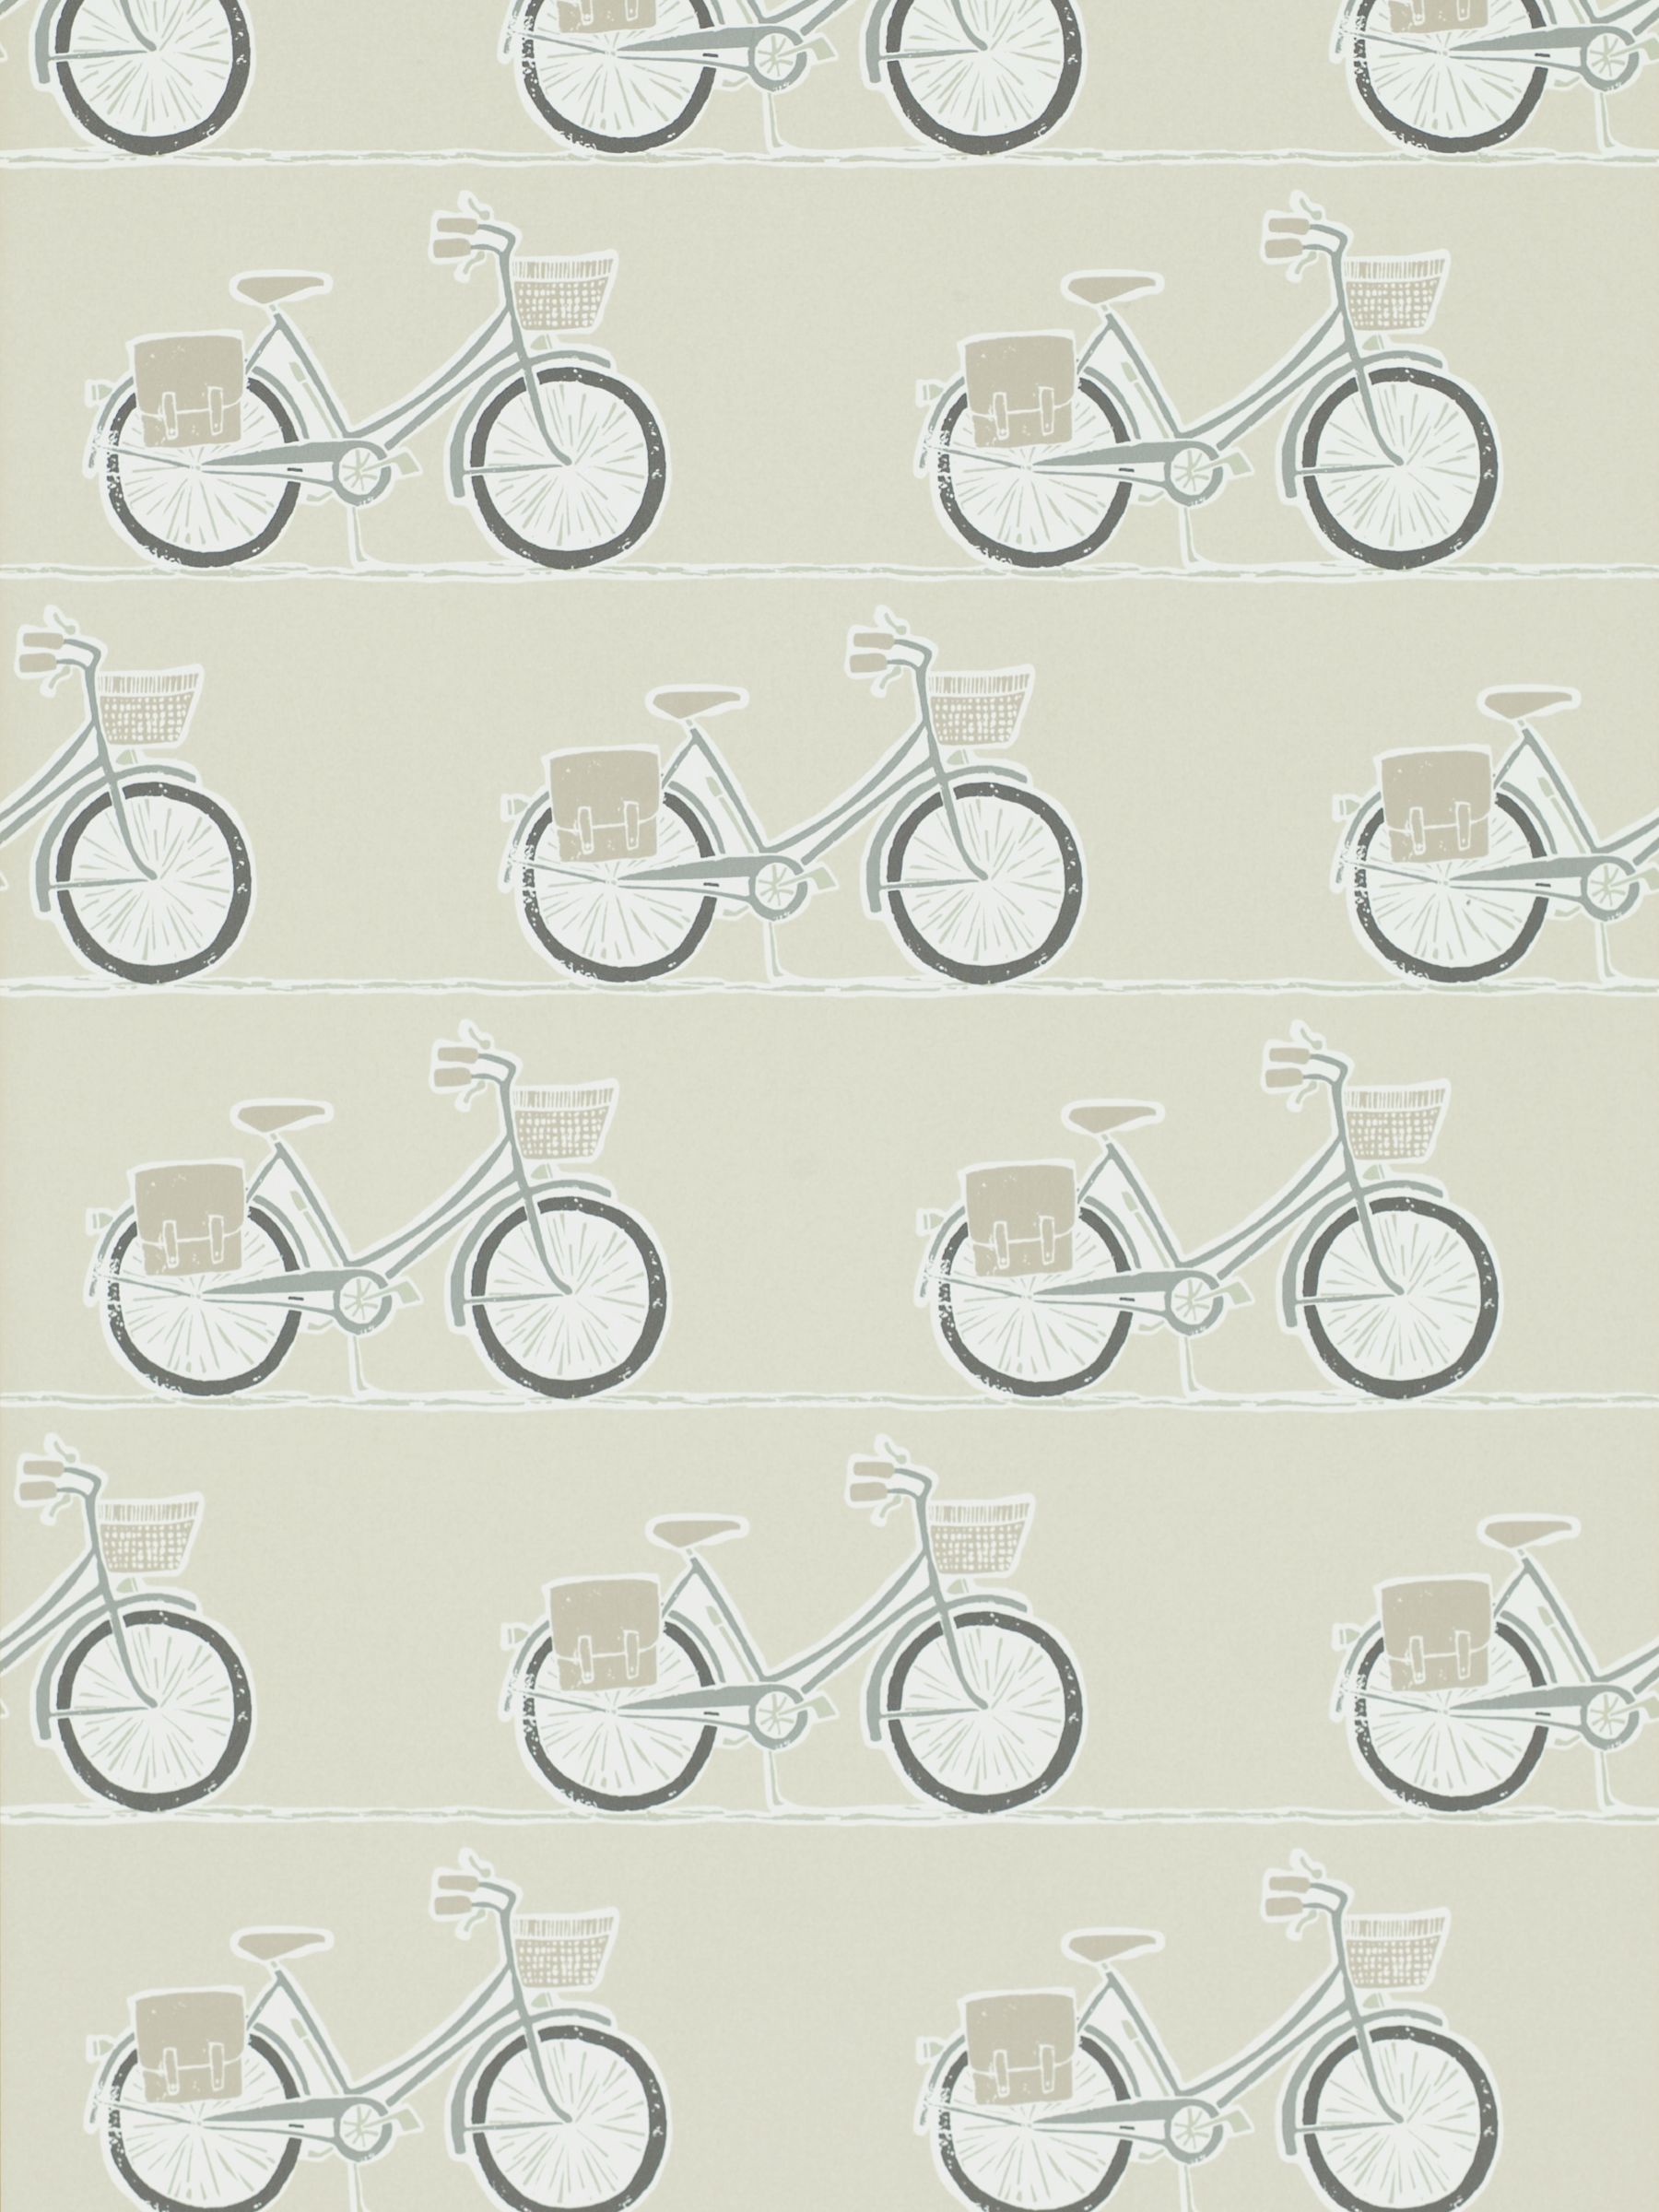 Bobbi Baker desktop Wallpapers